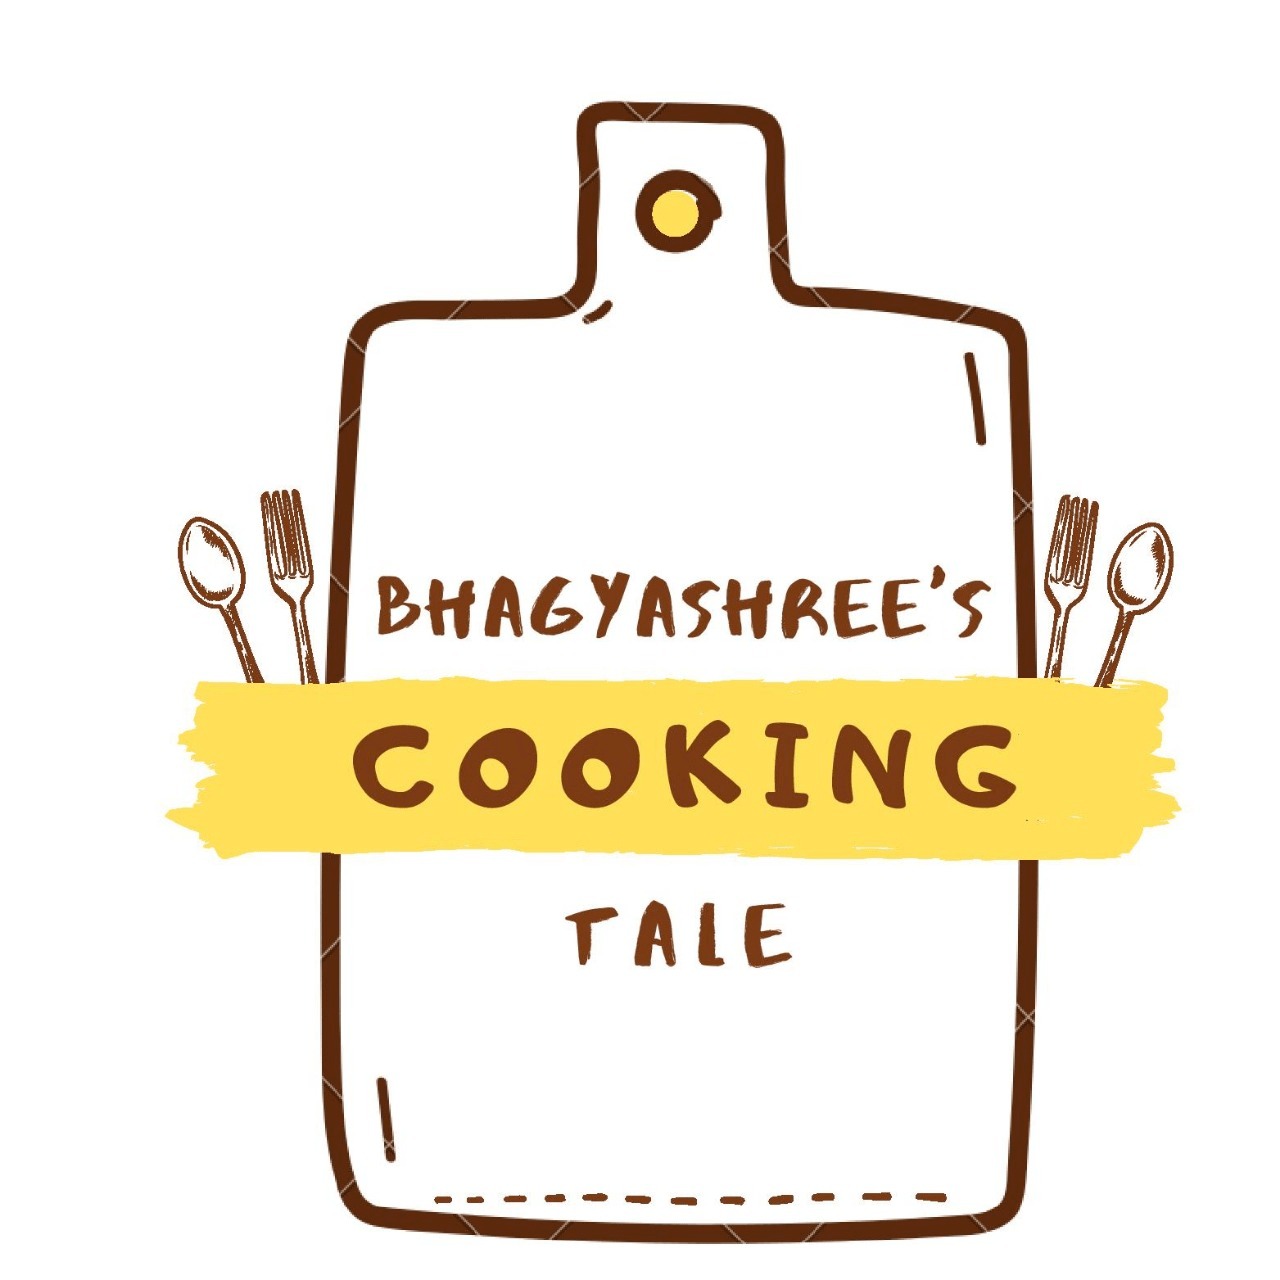 Bhagyashrees Cooking Tale